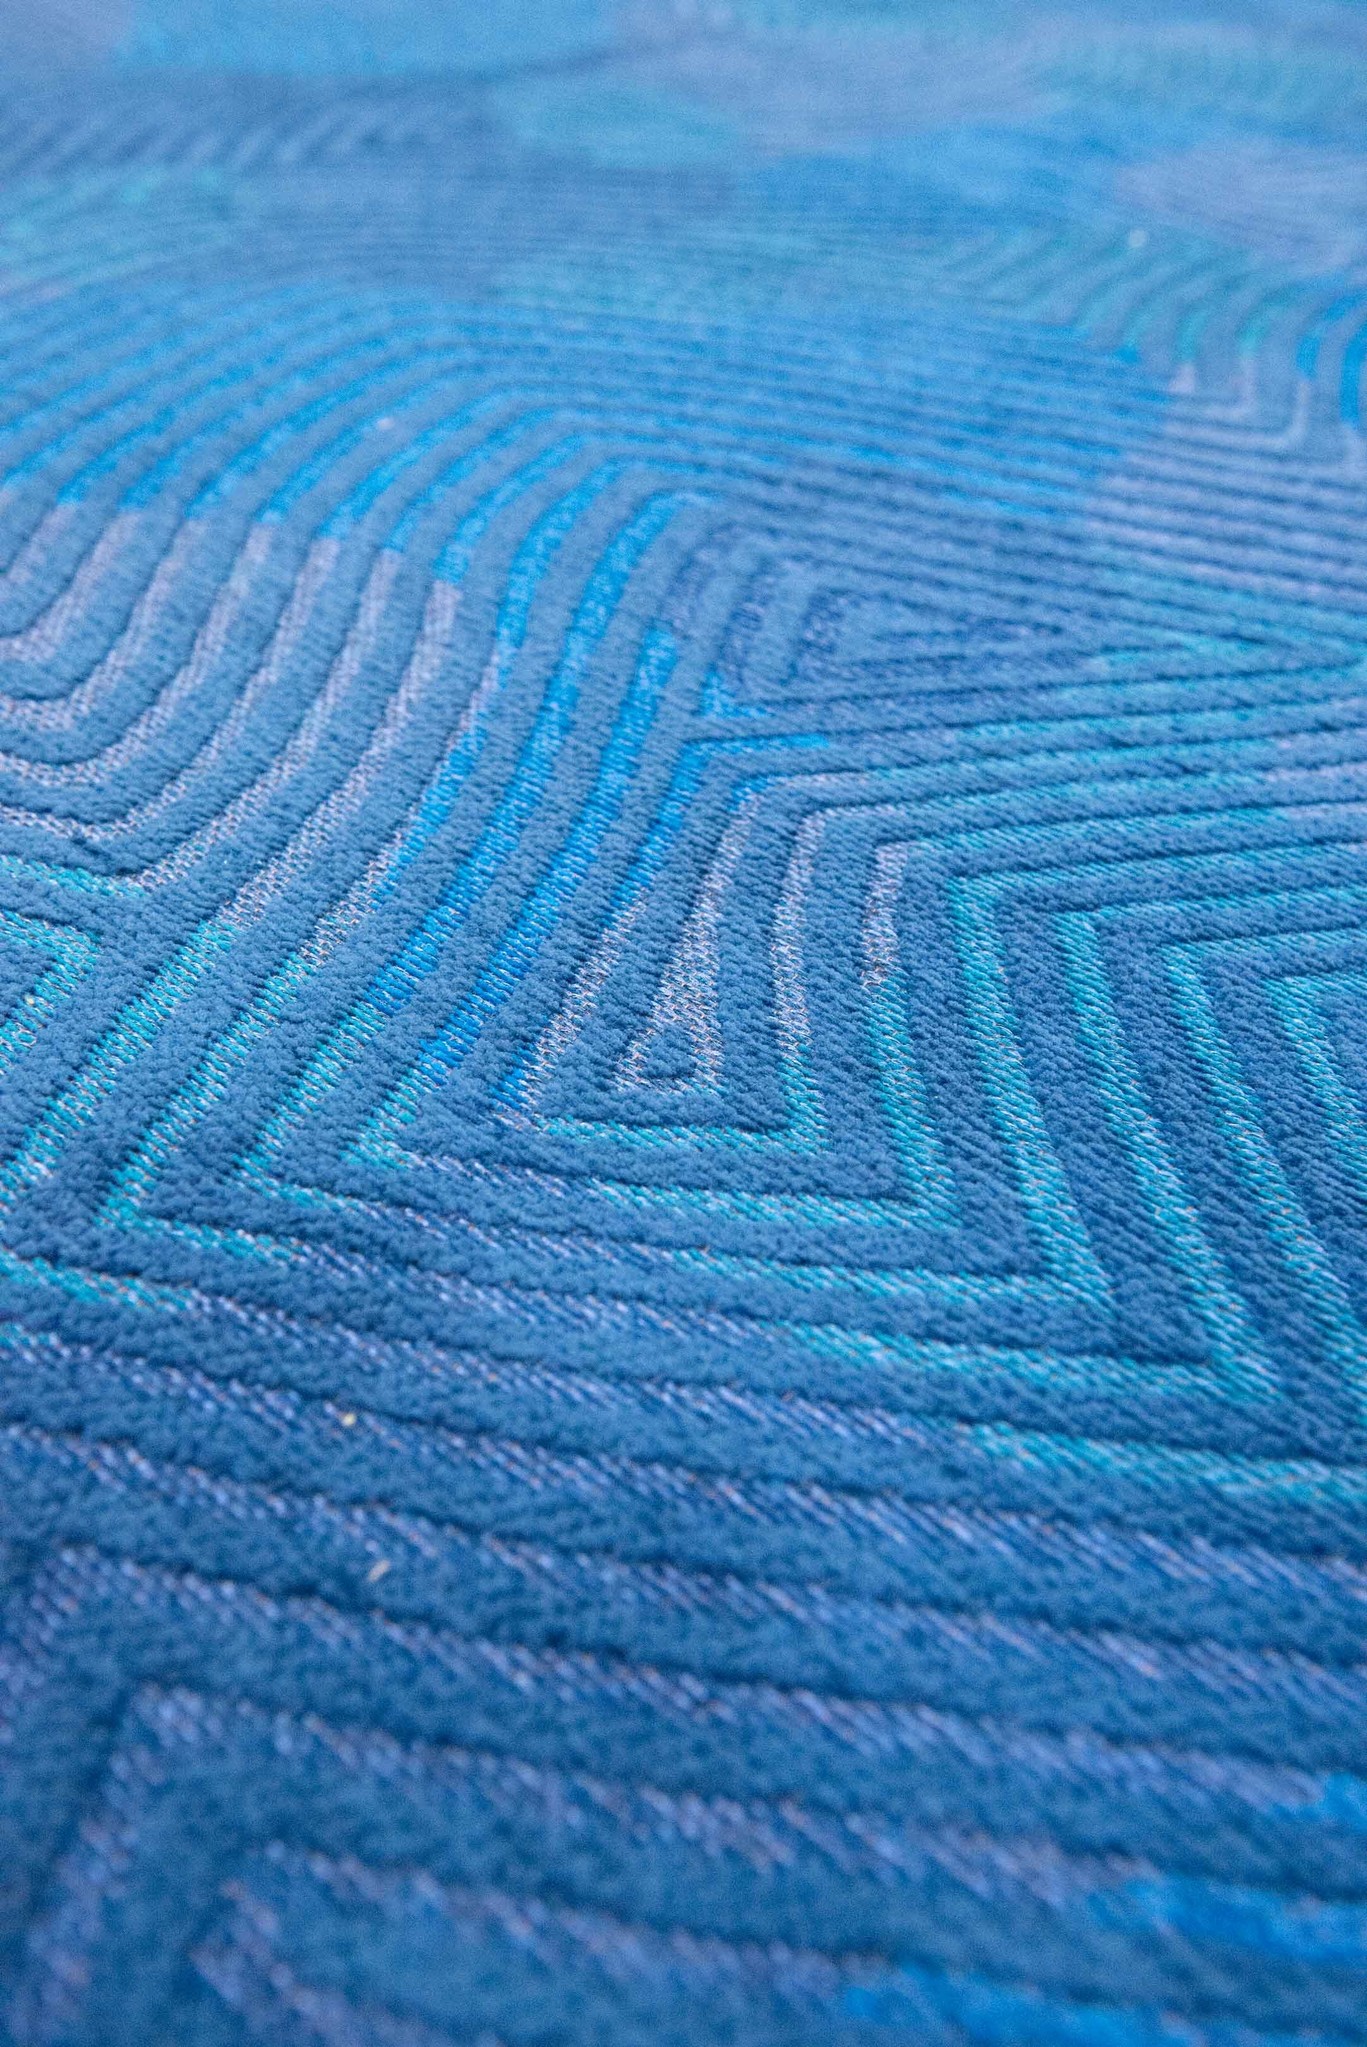 Blue Flatwoven Rug ☞ Size: 9' 2" x 13' (280 x 390 cm)